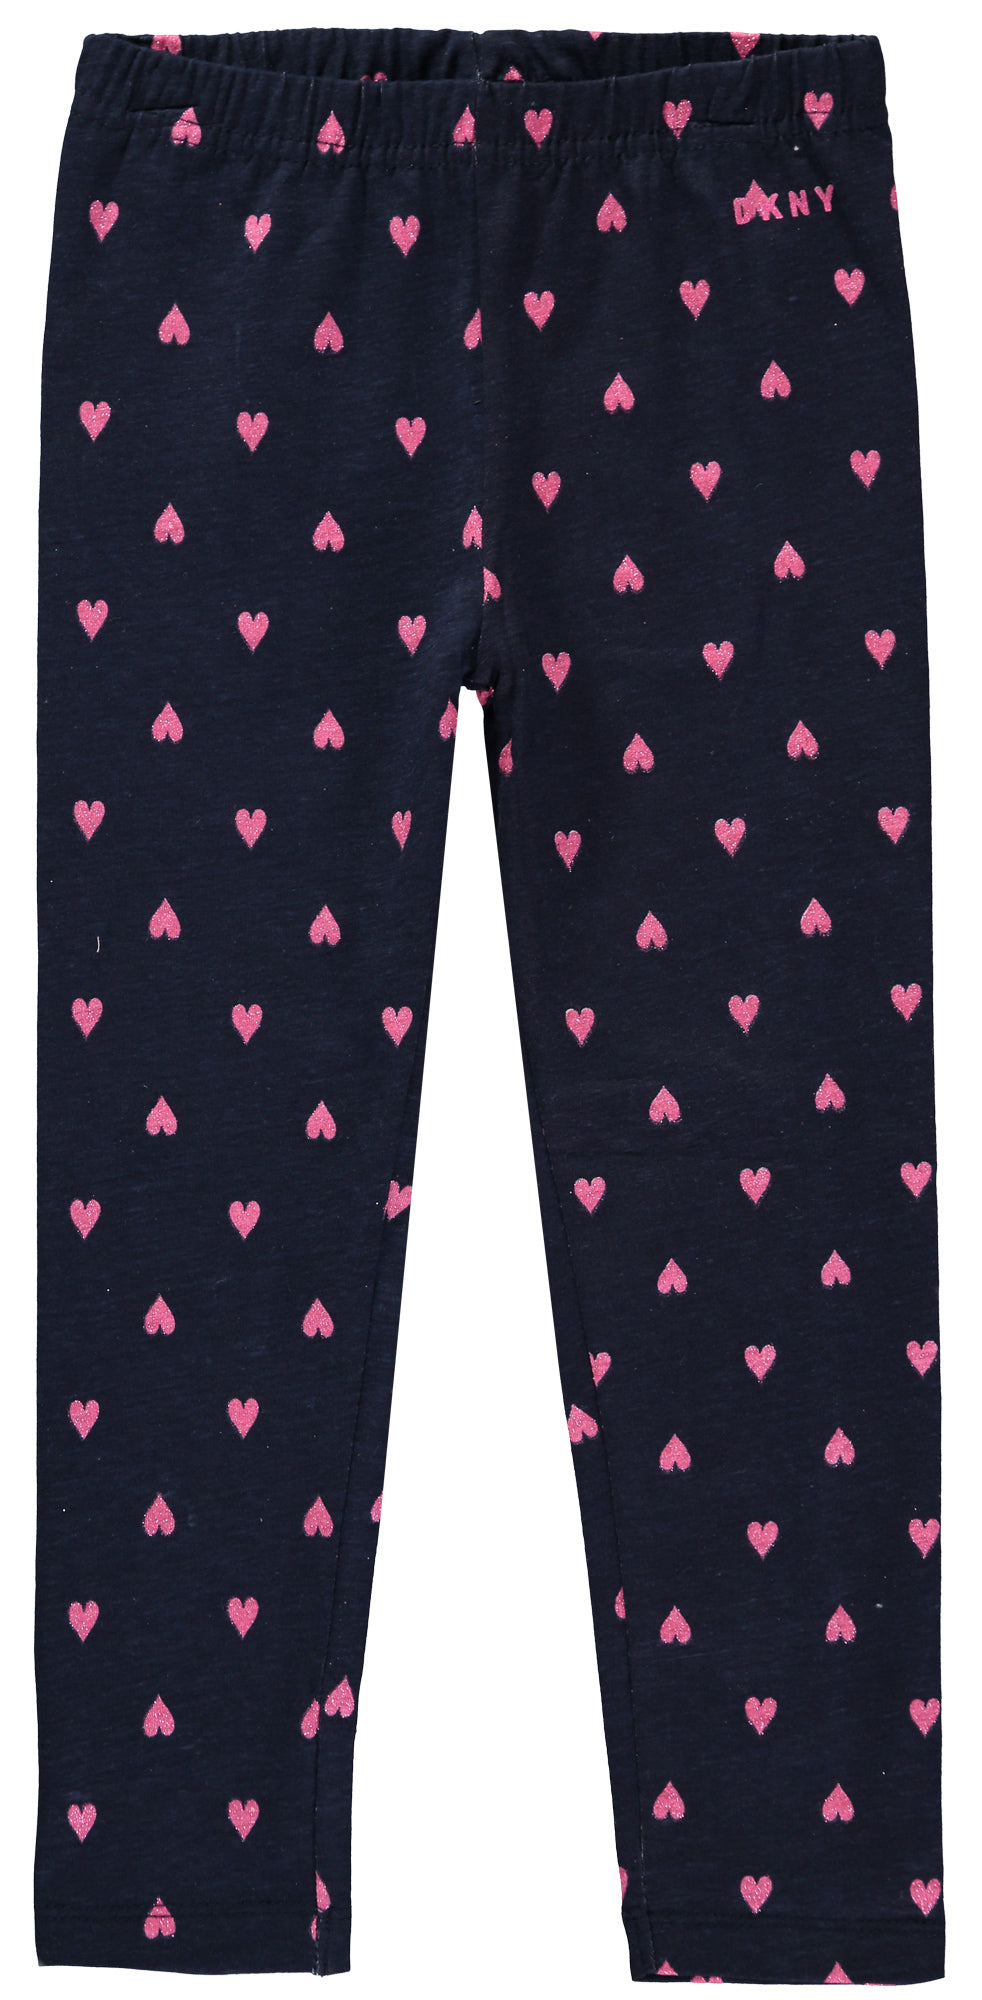 DKNY Girls 12-24 Months NYC Heart Legging Set